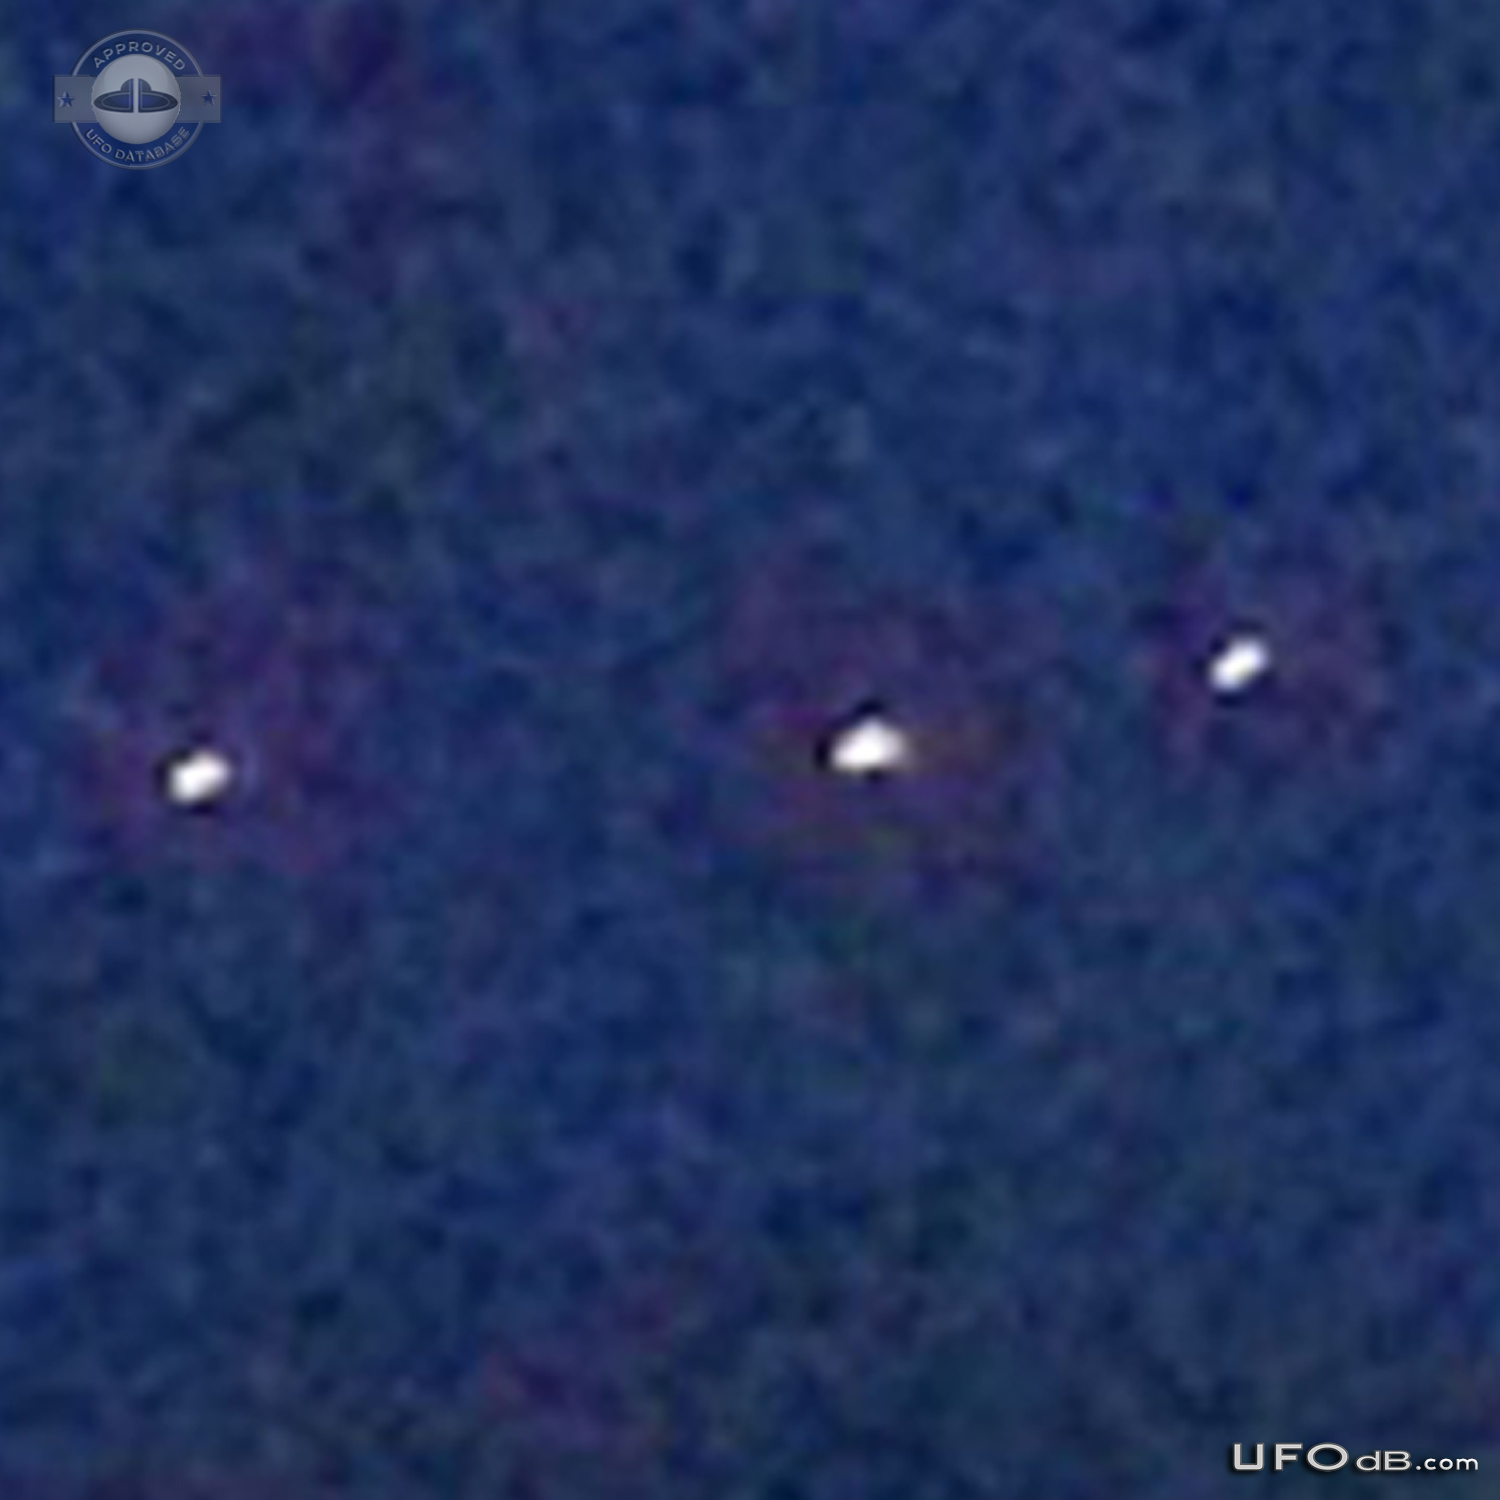 Group of UFOs over Maple Ridge British Columbia Canada 2014 UFO Picture #596-3